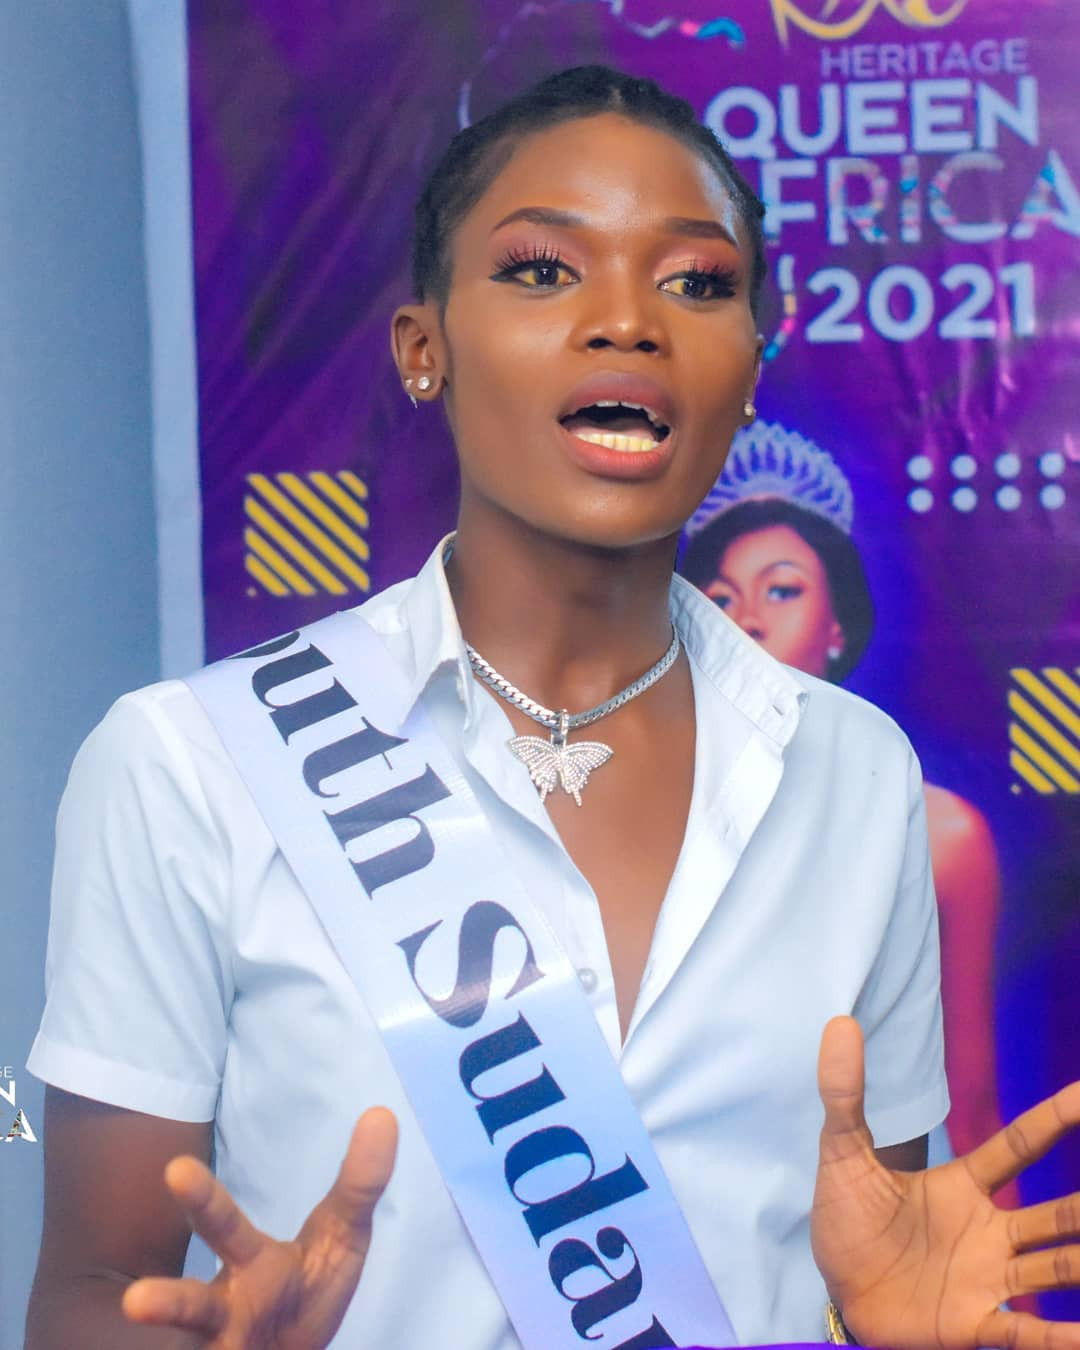 candidatas a heritage queen africa 2021. final: 19 june. - Página 4 NP346l